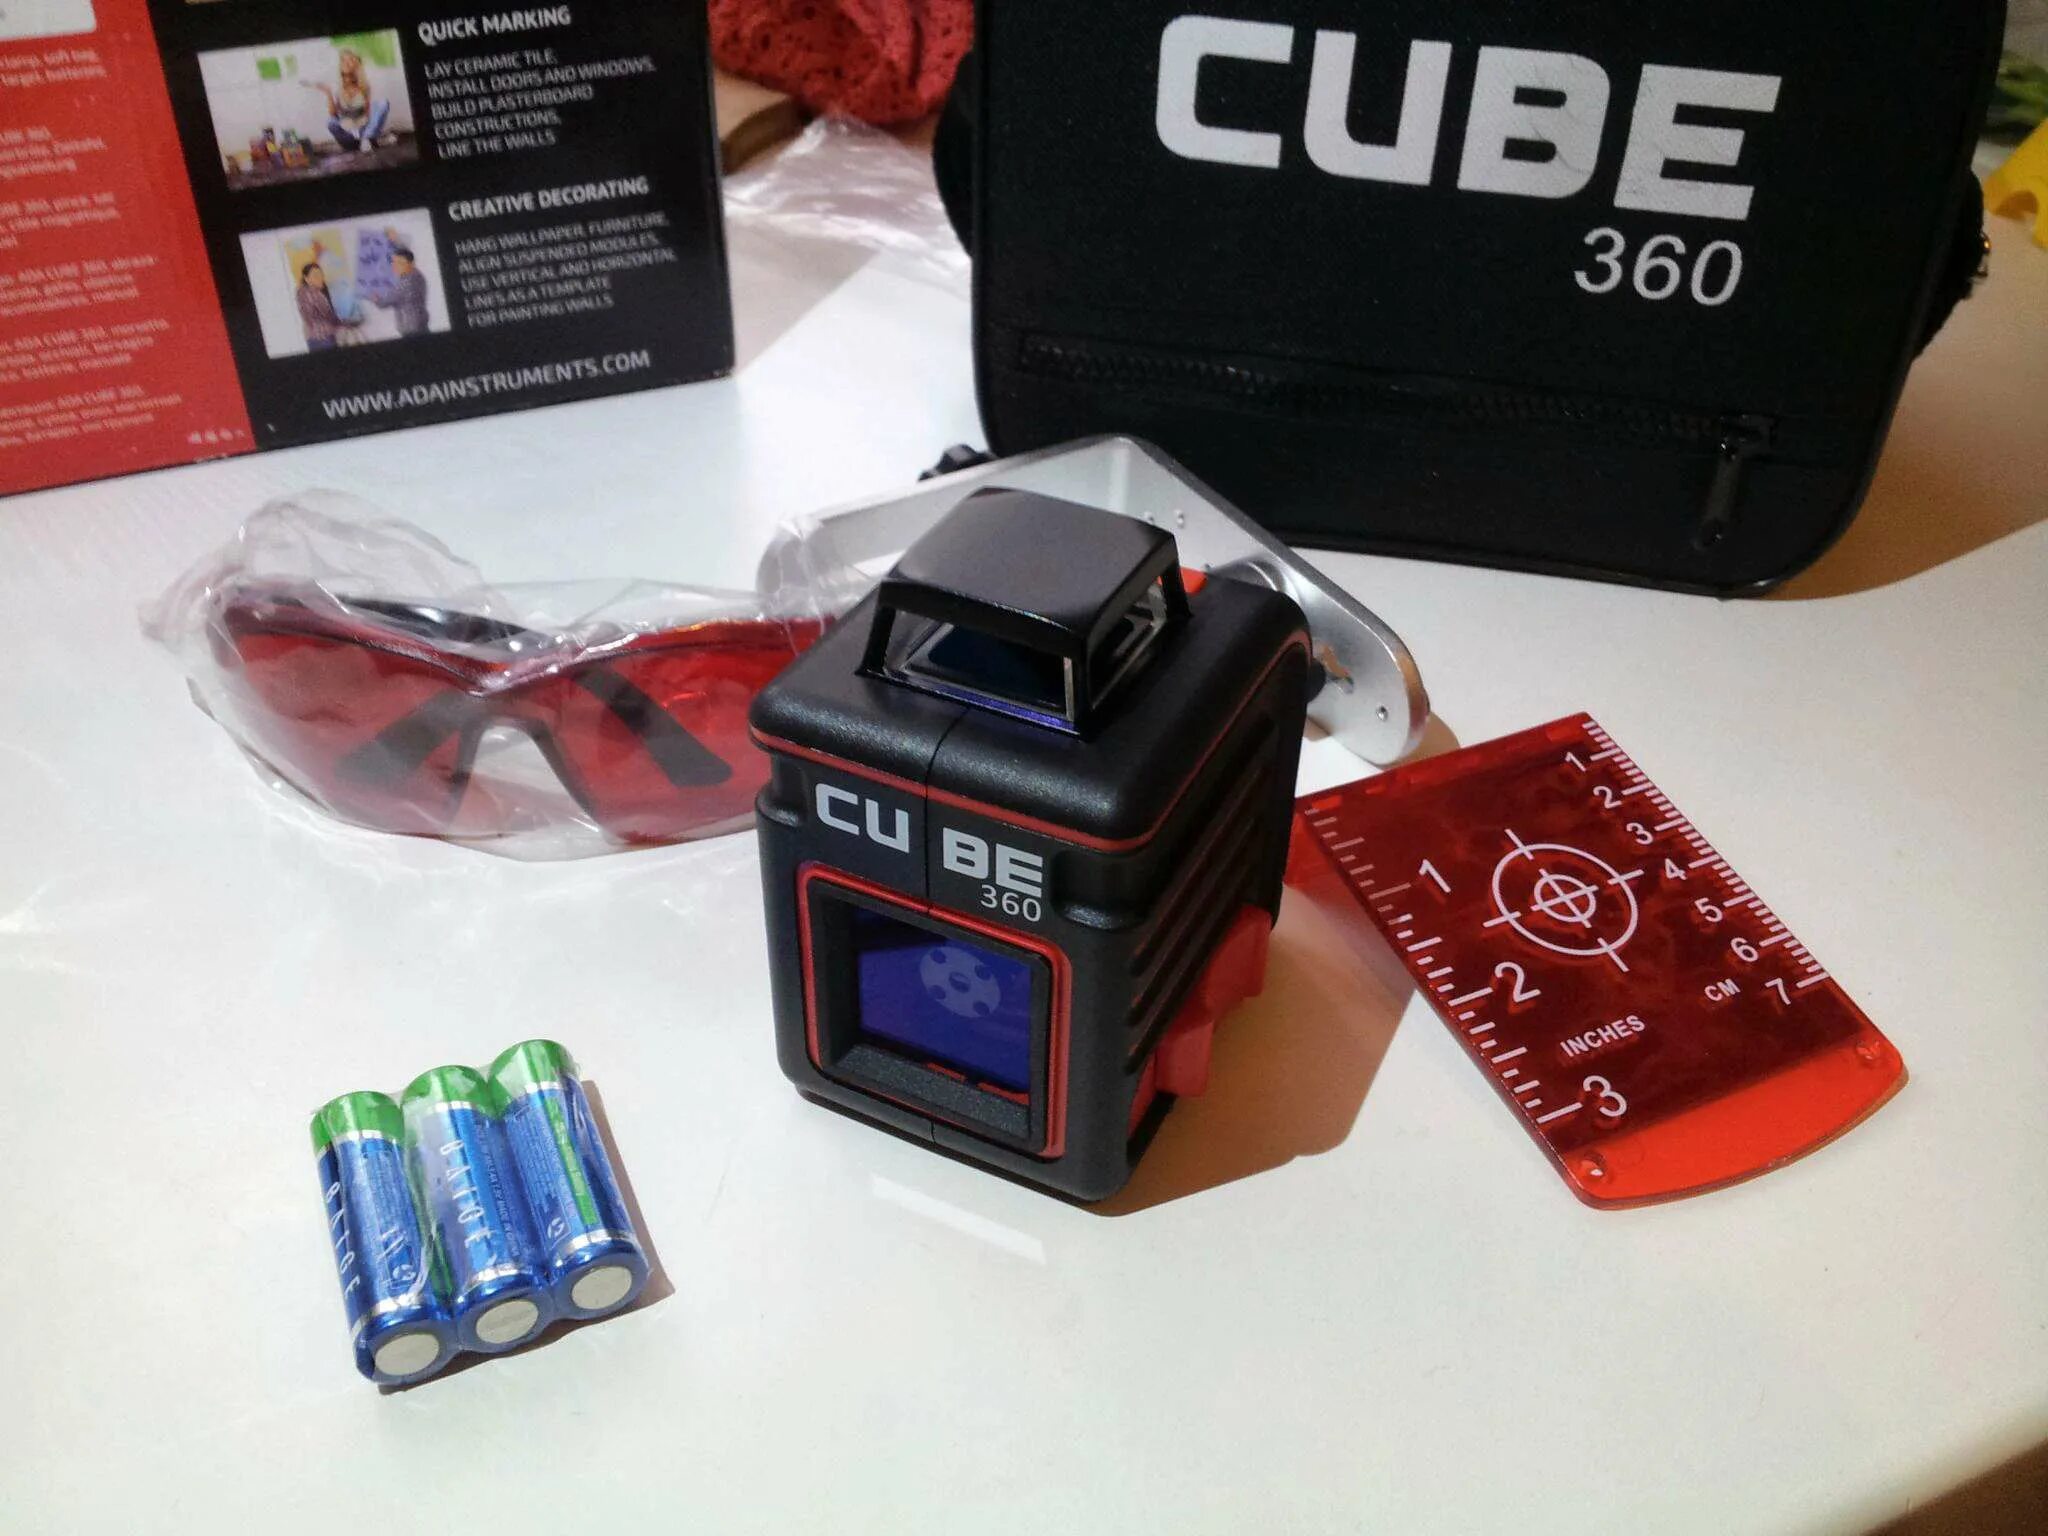 Ada cube 2. Уровень лазерный ada Cube 3-360. Ada Cube 2-360 Green. Микросхема для уровня ada Cube 360. Cube 2-360 батарея.